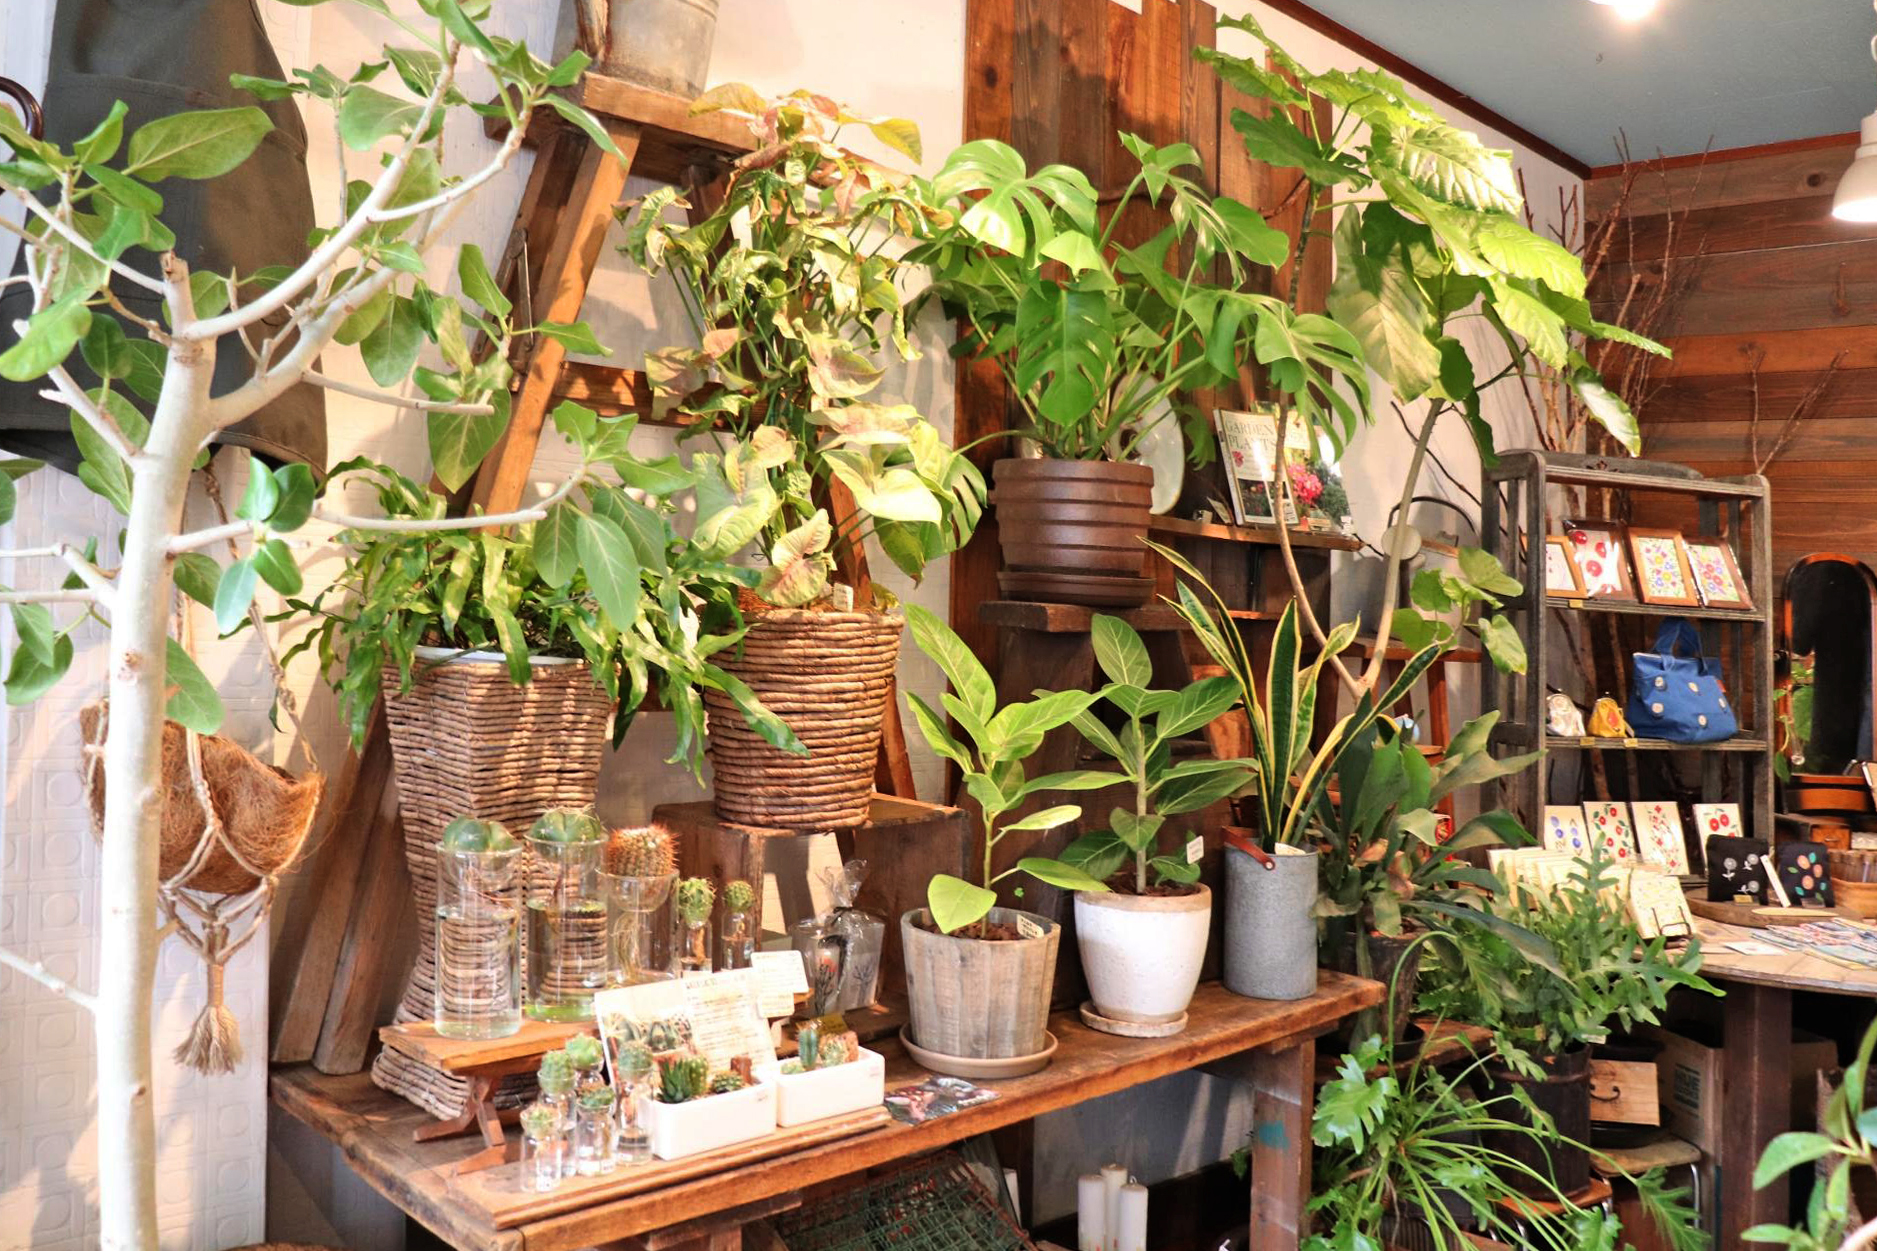 Kitowa 樹と環 吹上 植物のある空間で 素敵な雑貨と古道具に出会えるお店 ライフデザインズ